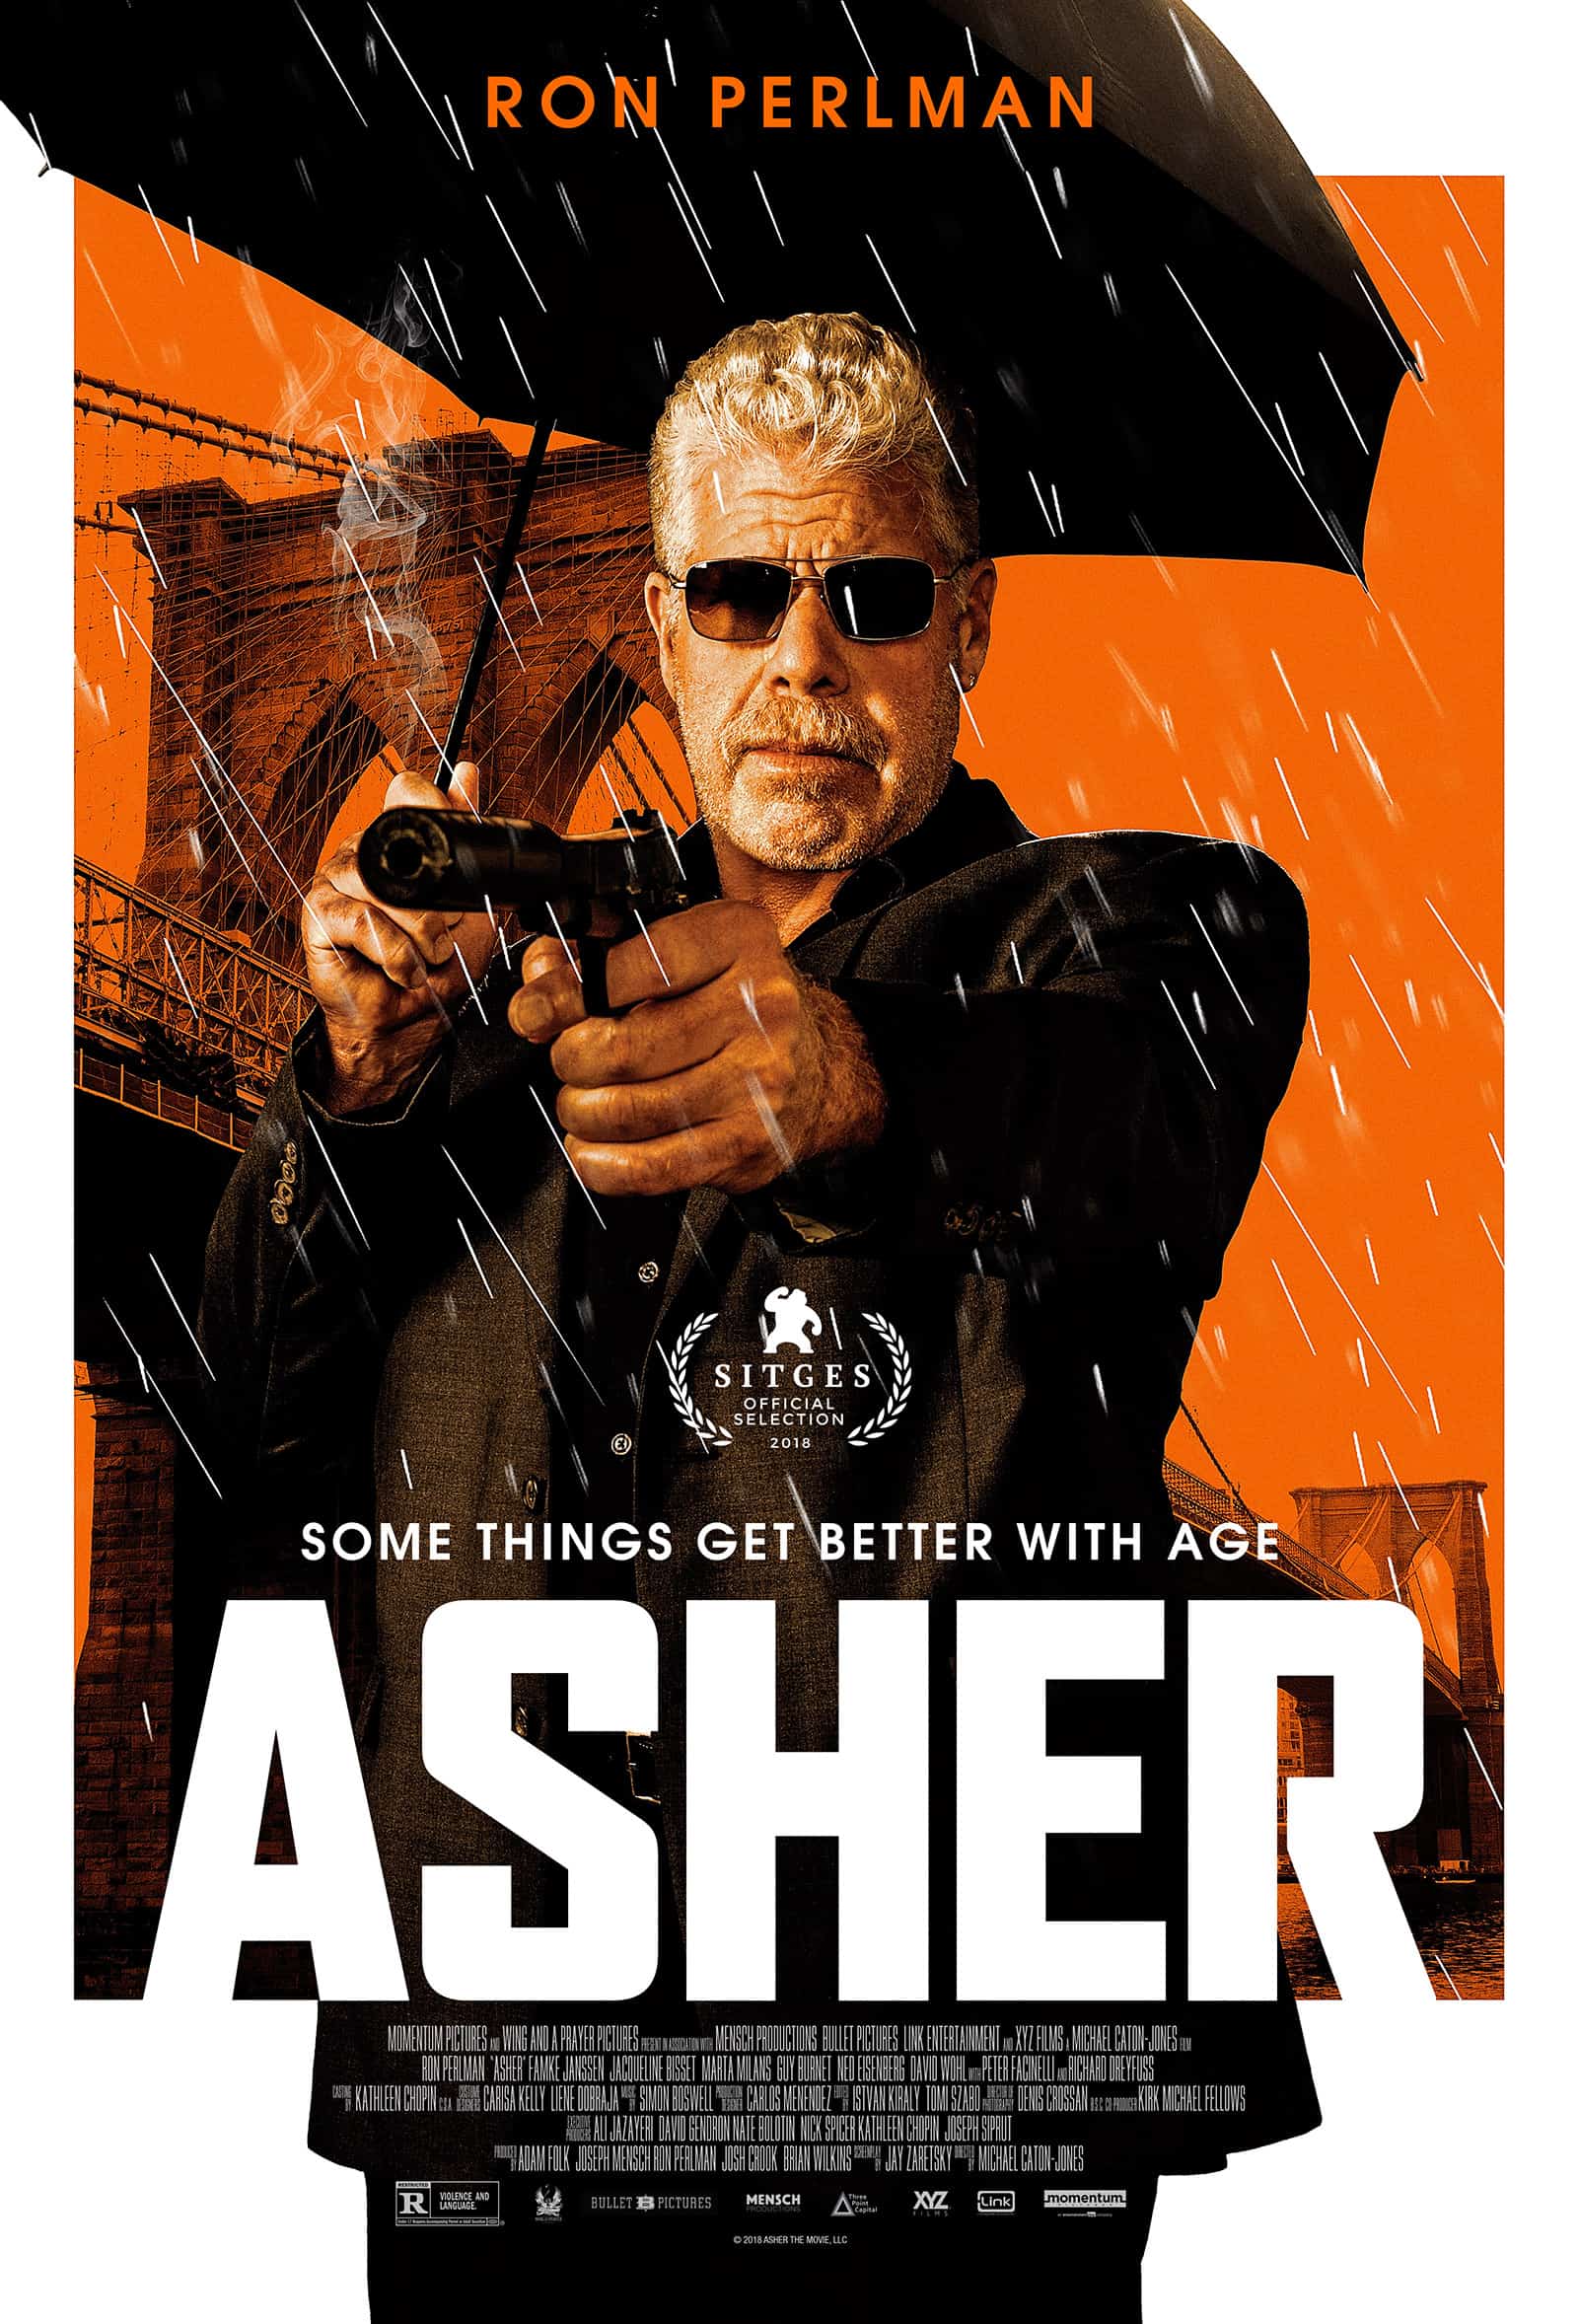 Asher (2018) แอช ล่าหยุดโลก